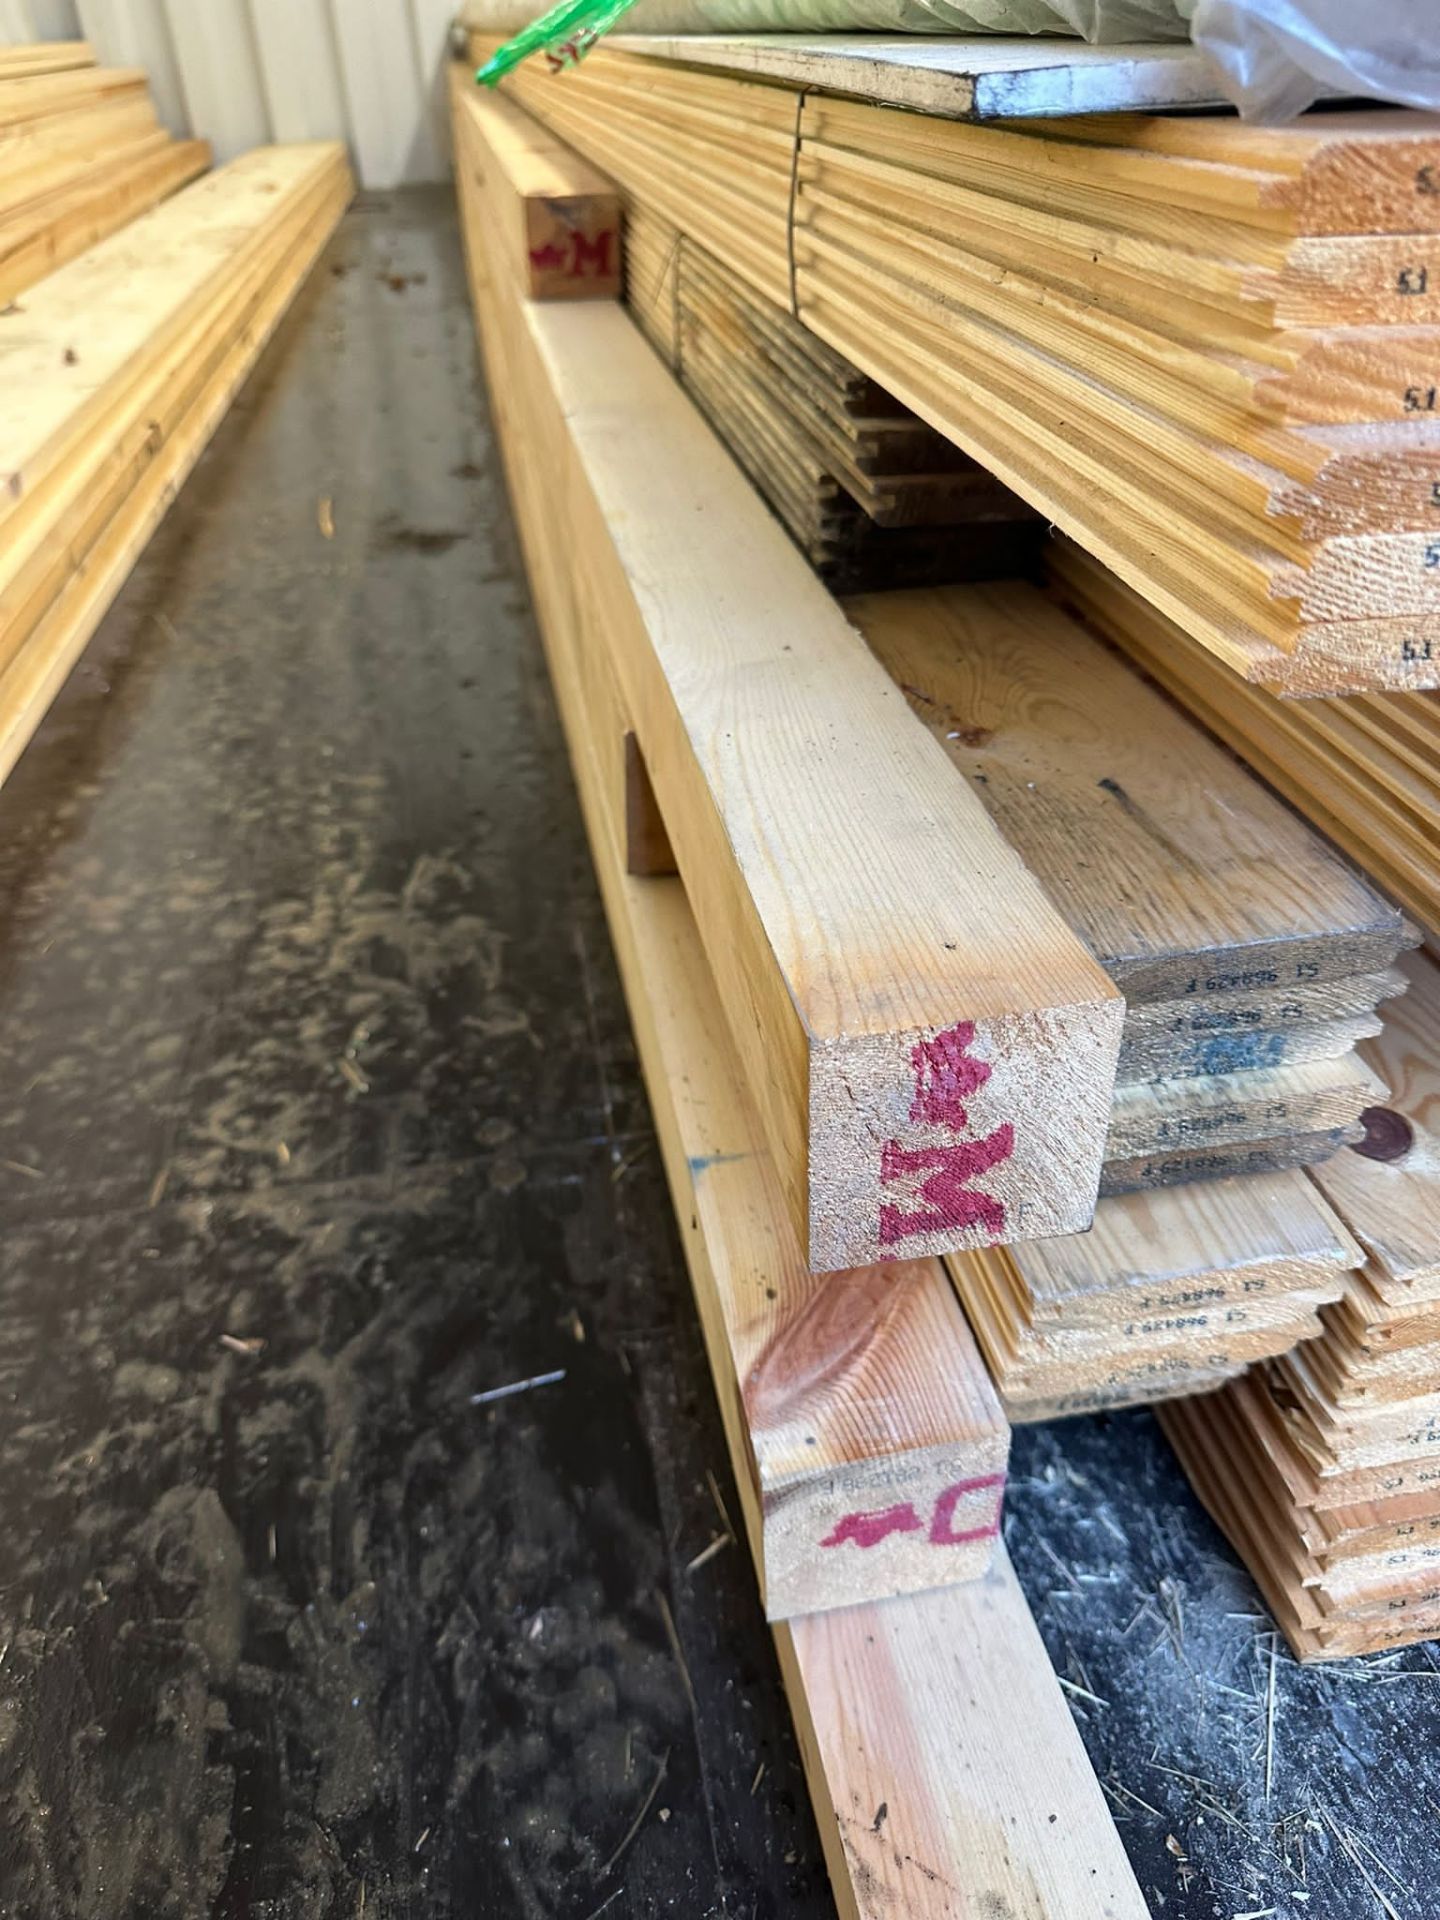 Timber prepared timber all dry stored timber - Bild 8 aus 10